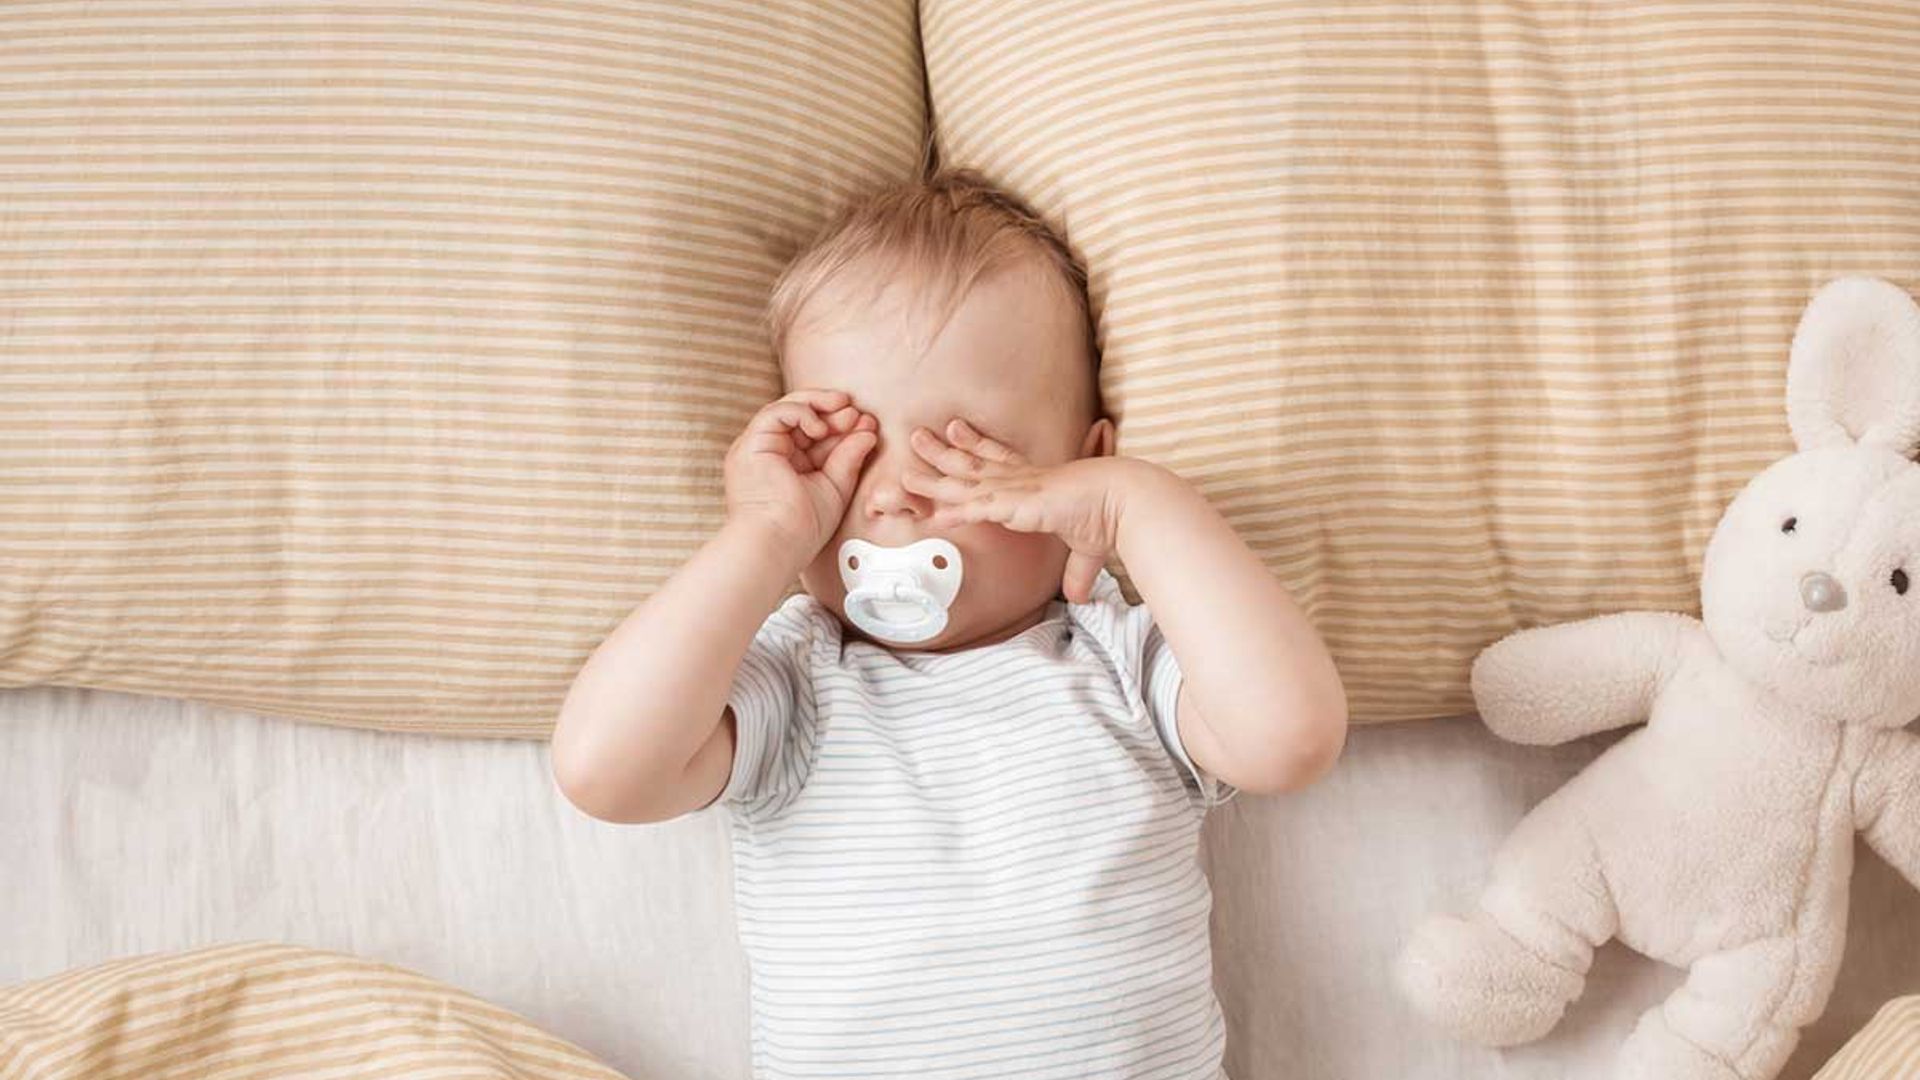 10 expert tips to help your baby sleep in a heatwave